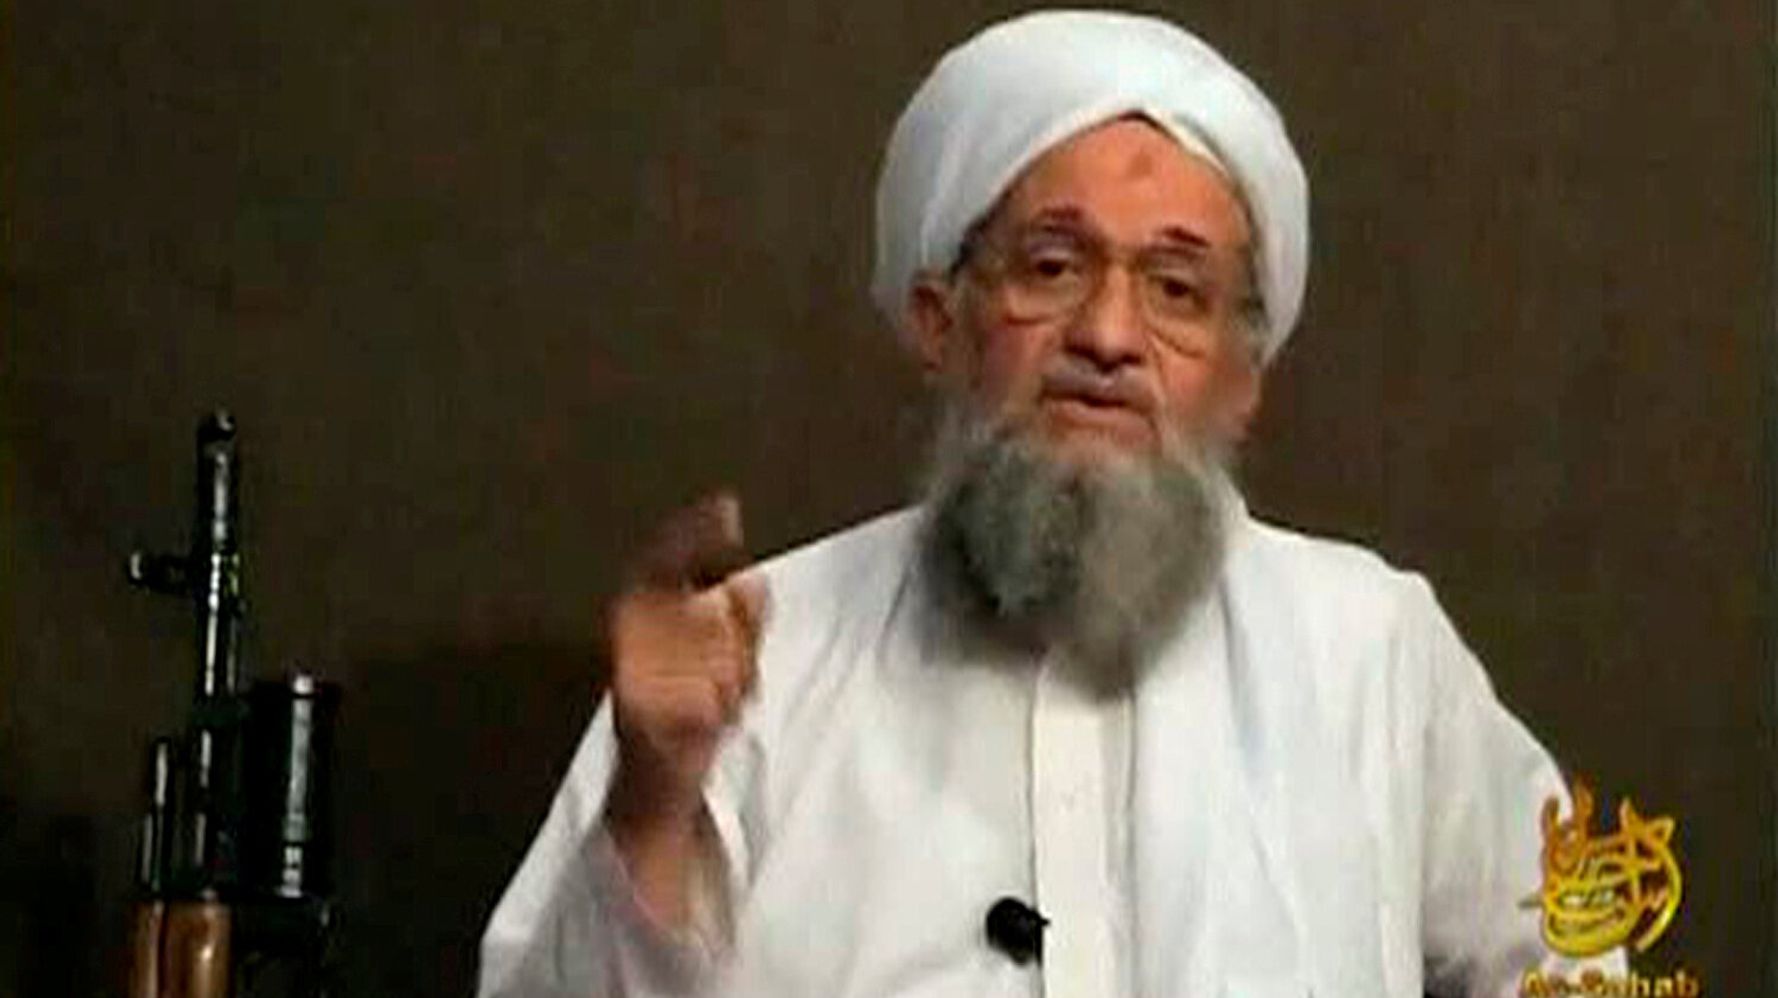 Al-Qaida Chief Appears In Video Marking 9/11 Anniversary